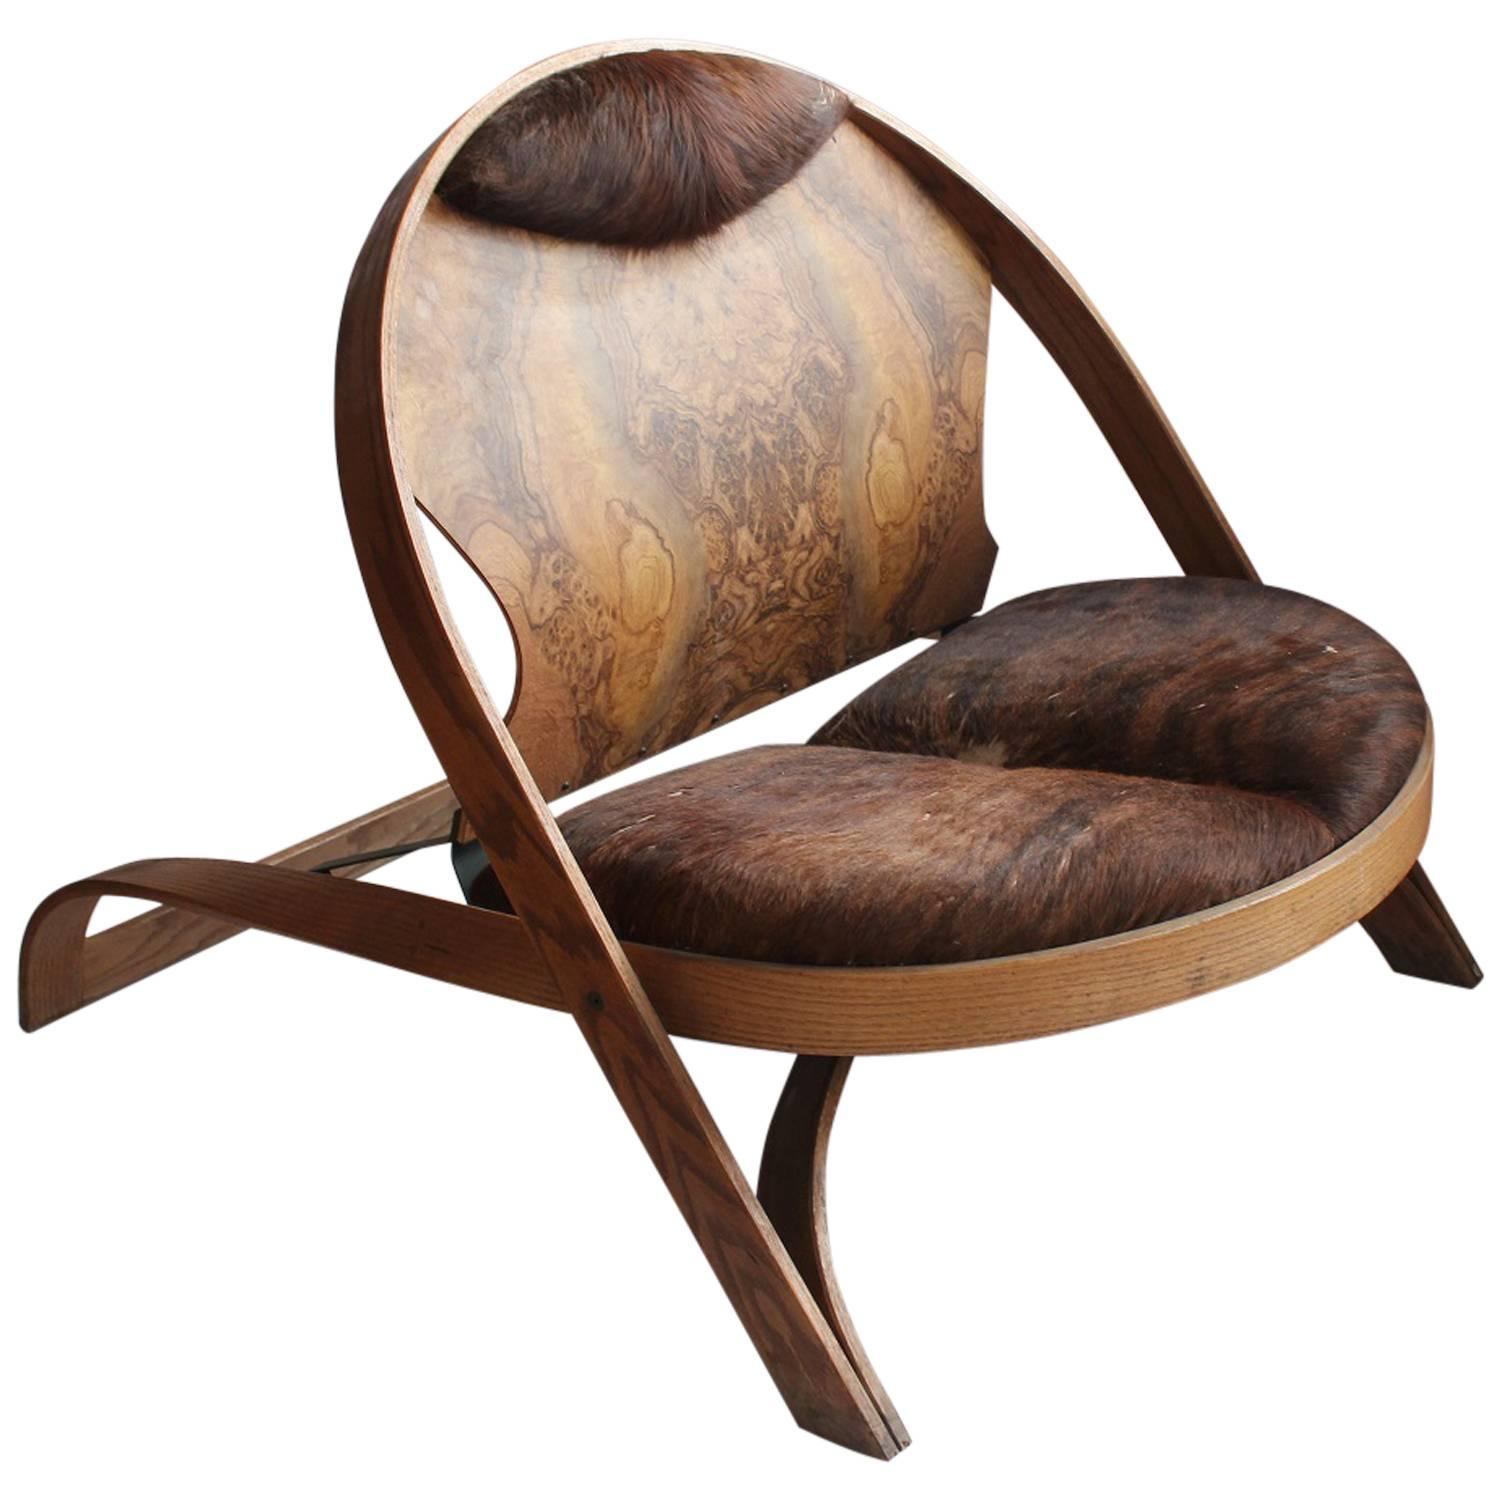 Spectacular Chair by Richard Artschwager